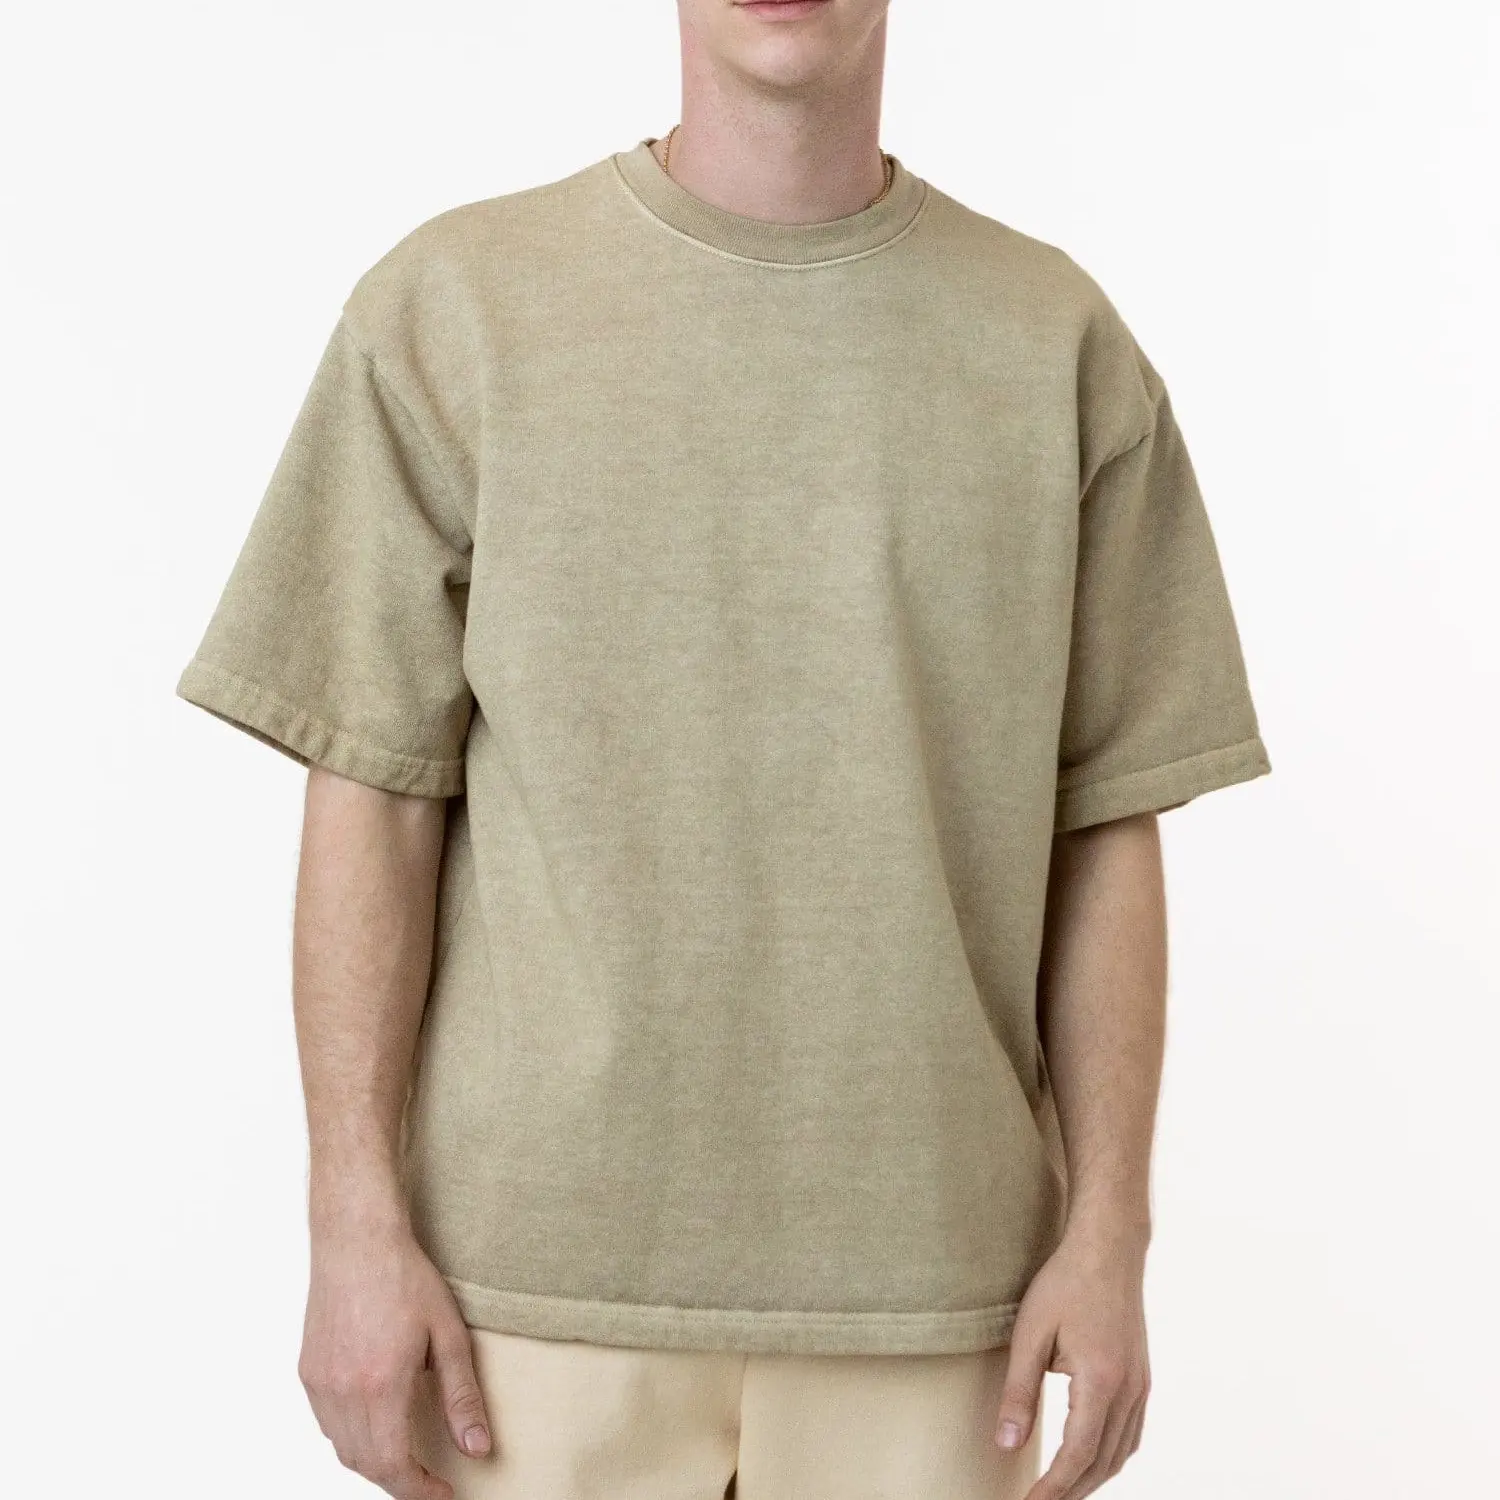 Men's Round Neck Basic Custom T-Shirts Gentlemen Casual Loose Plain OEM Fashion Tee shirt Regular Fit Short Sleeve Tops for Men